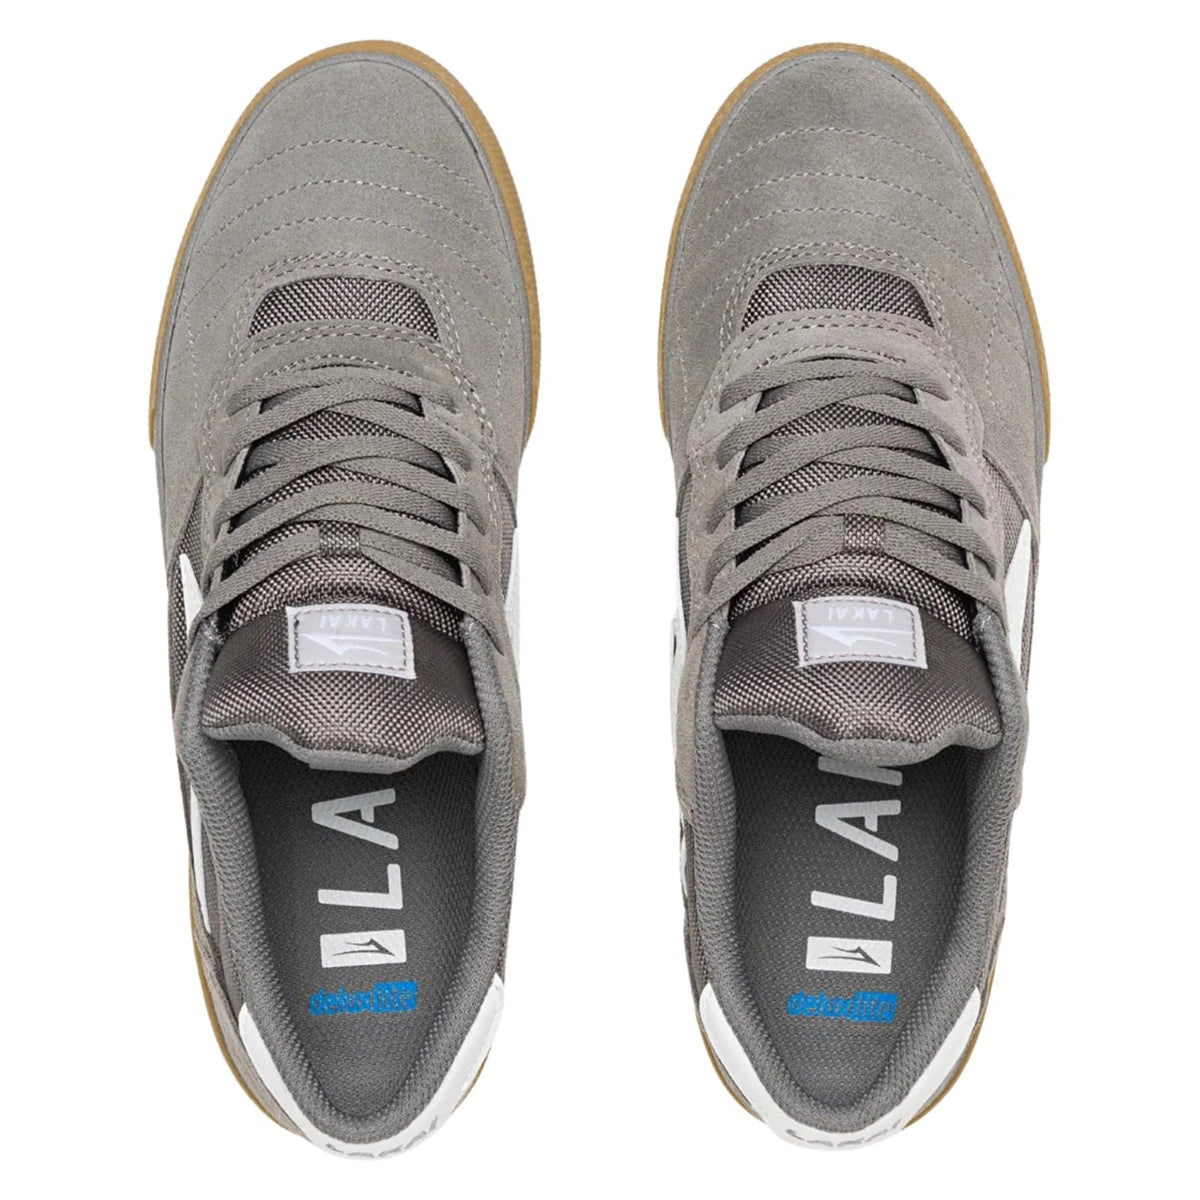 Lakai Cambridge Skate Shoes - Light Grey/Gum Suede SP23 - Mens Skate Shoes by Lakai